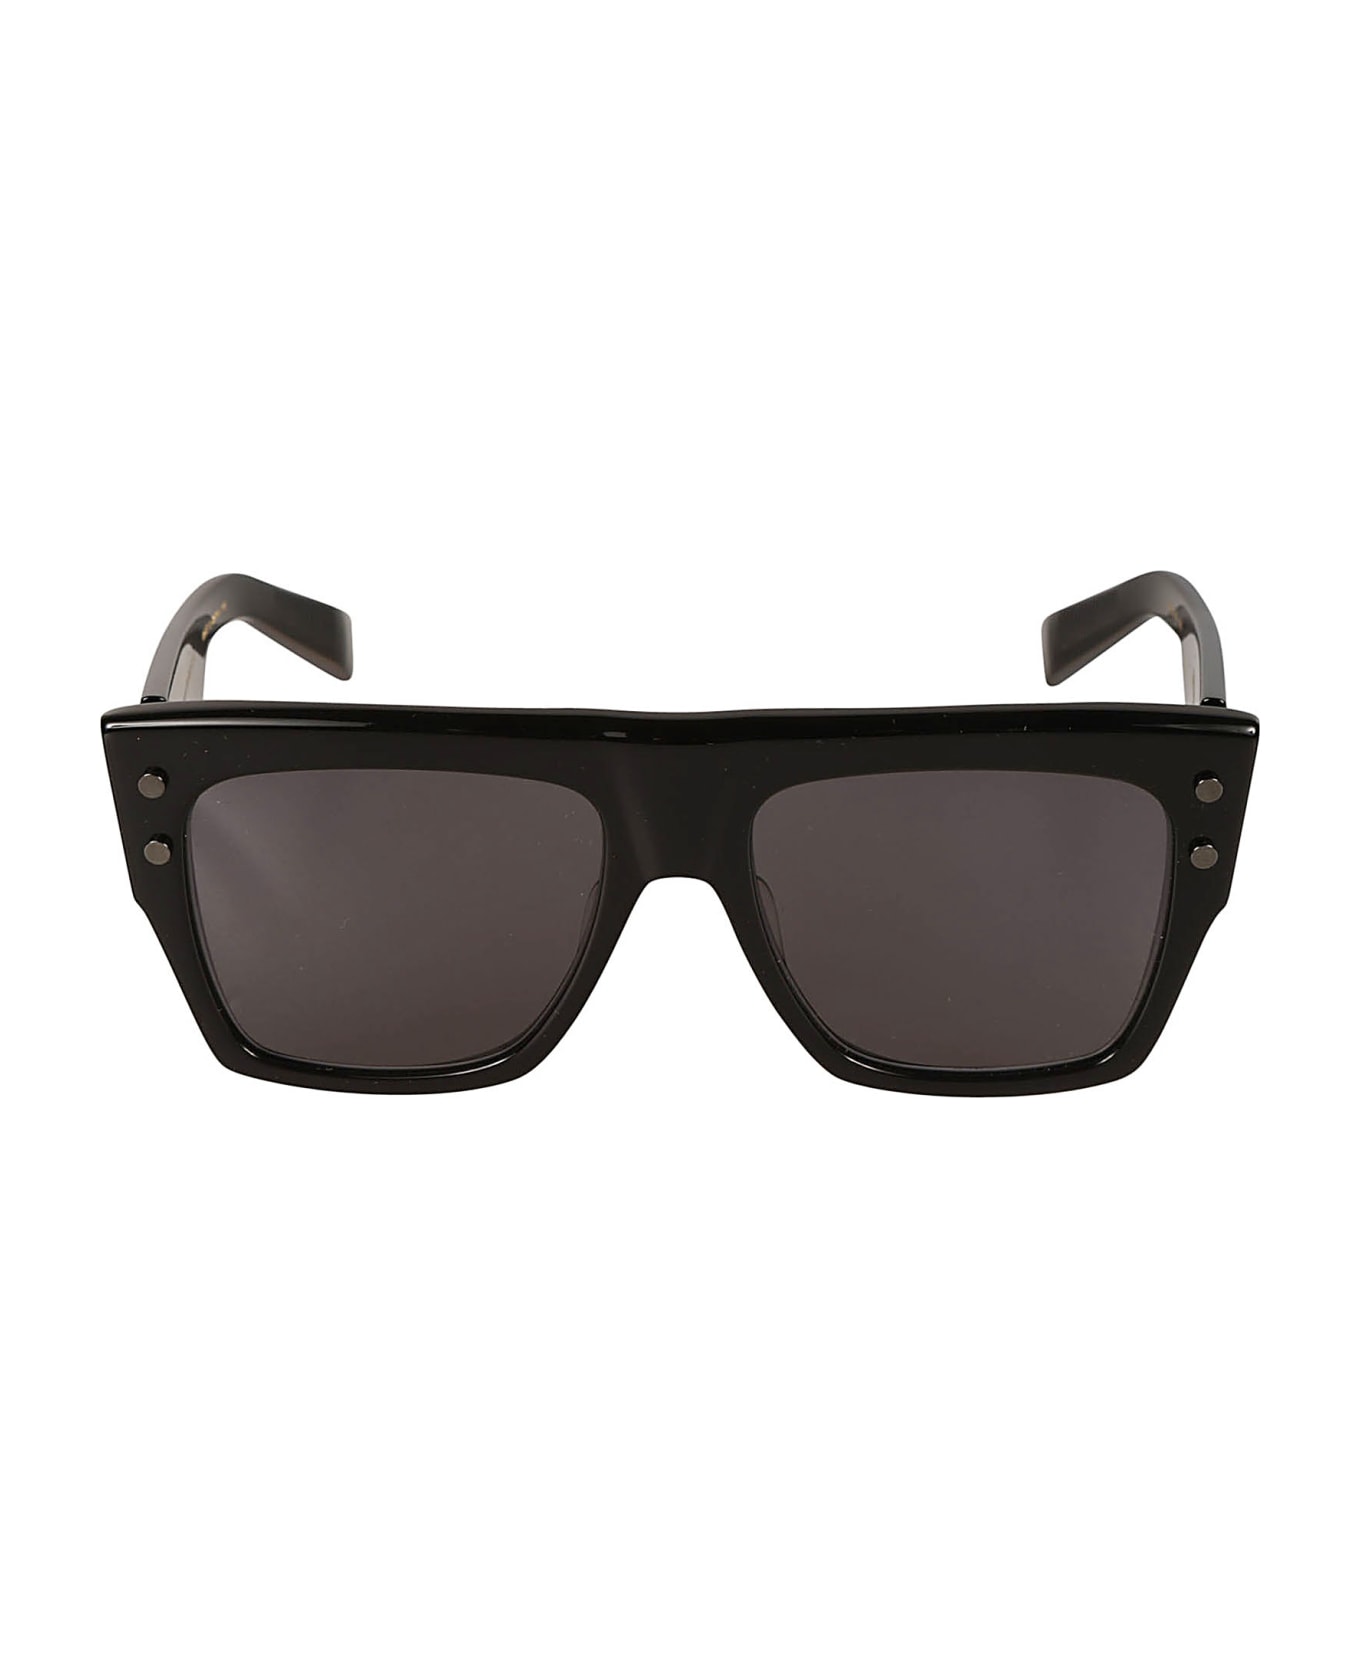 Balmain B-i Sunglasses Sunglasses - Black